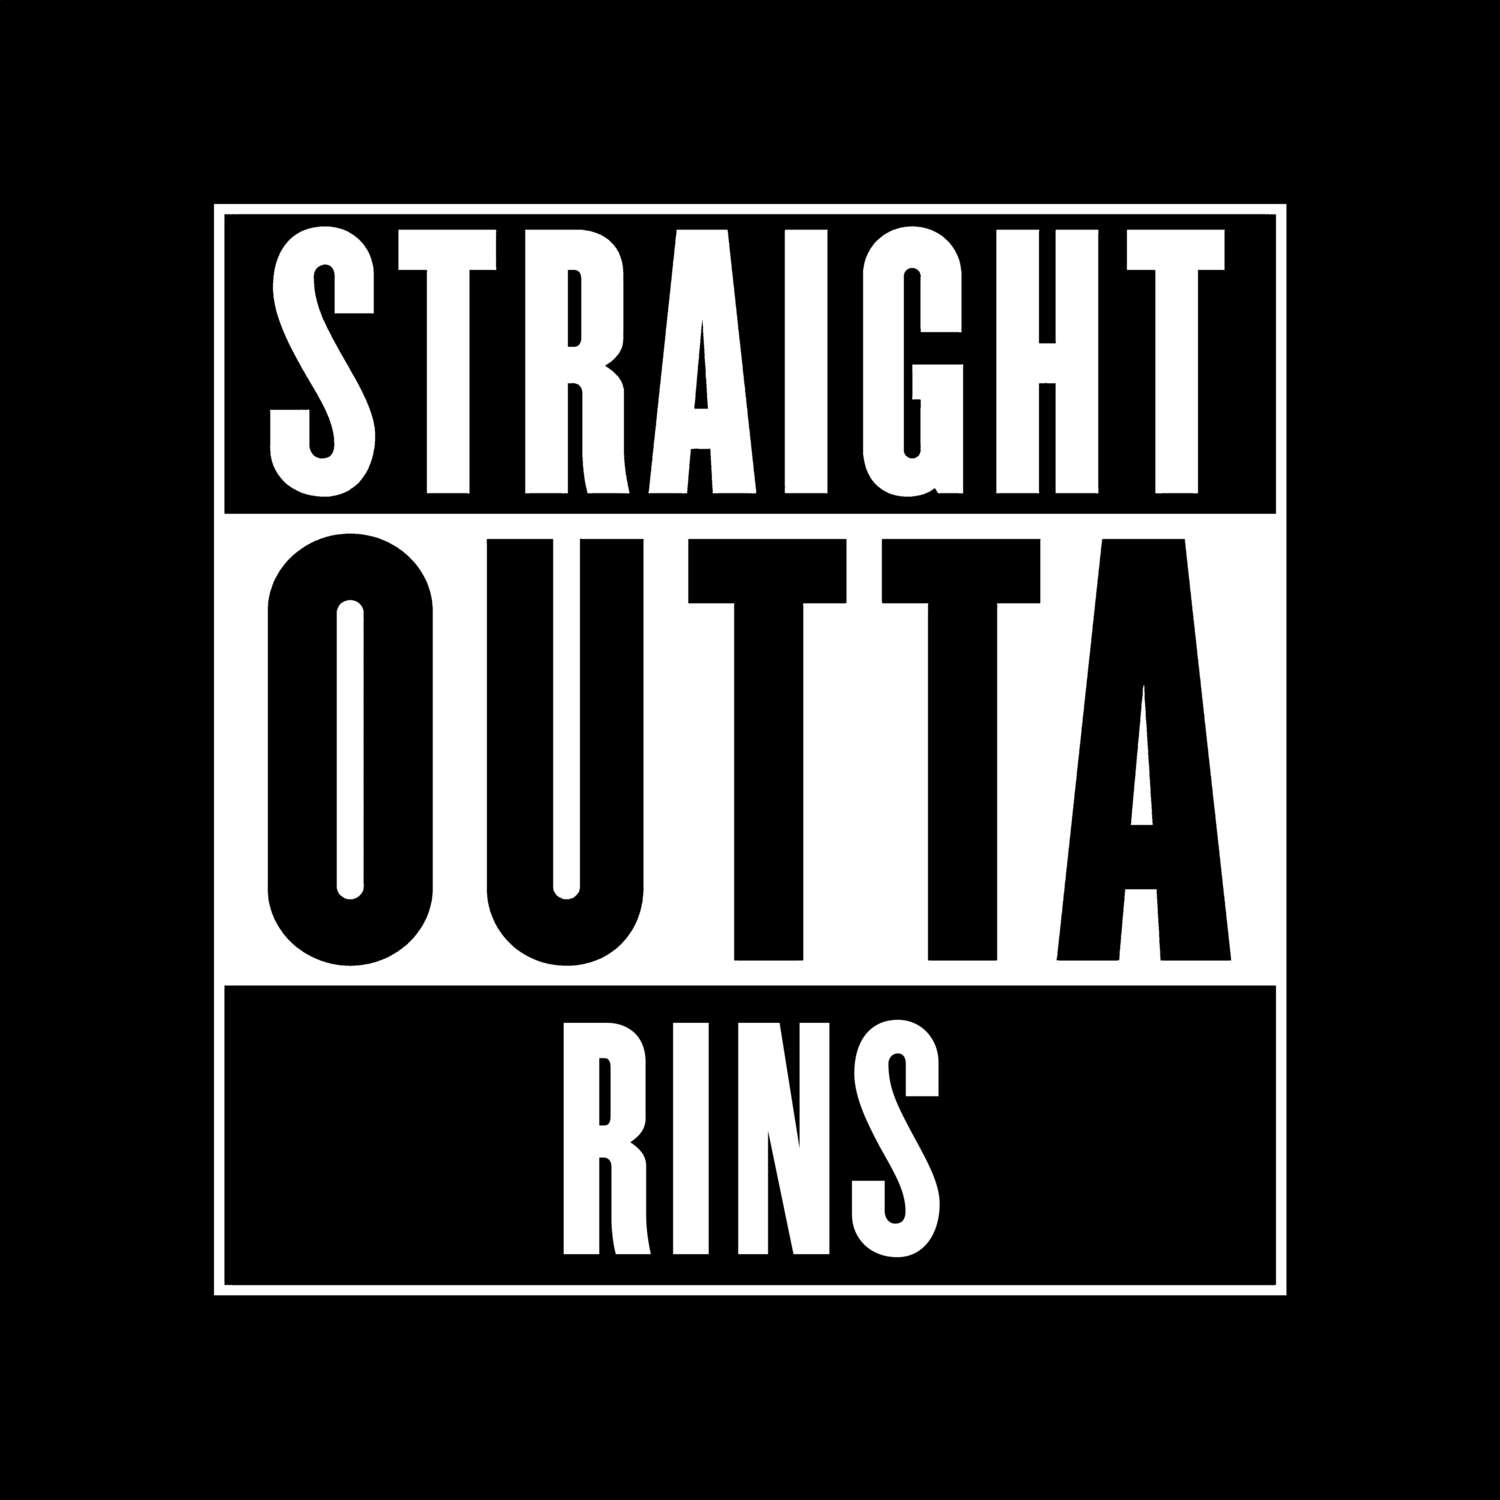 Rins T-Shirt »Straight Outta«